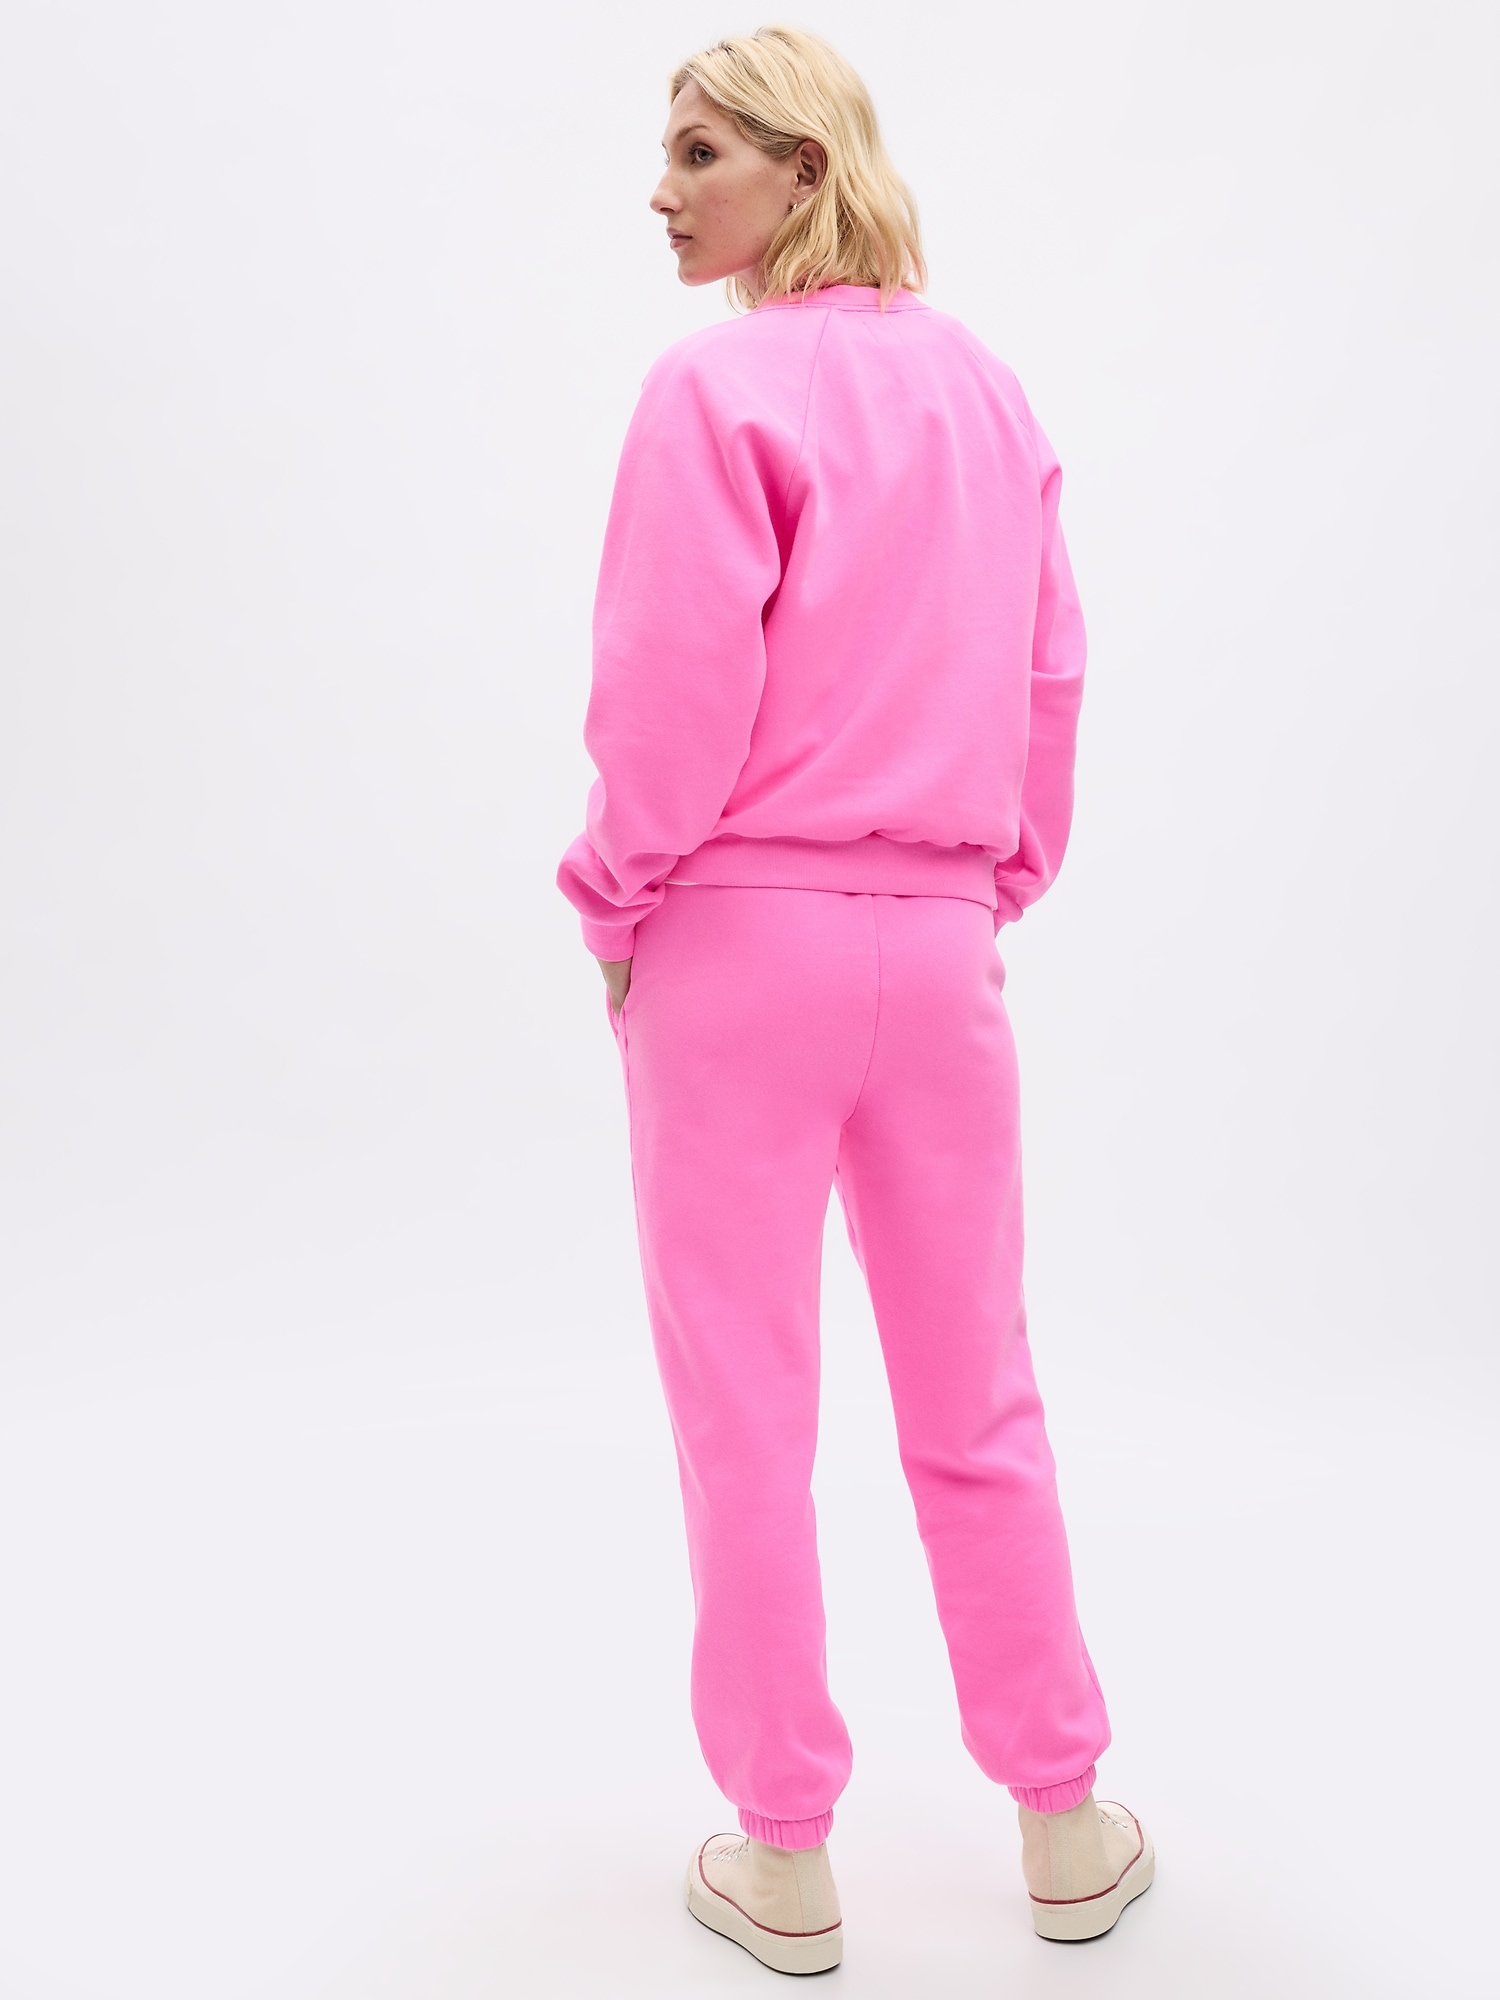 Women's - Embroidered Boyfriend Joggers in Vintage Blush Pink